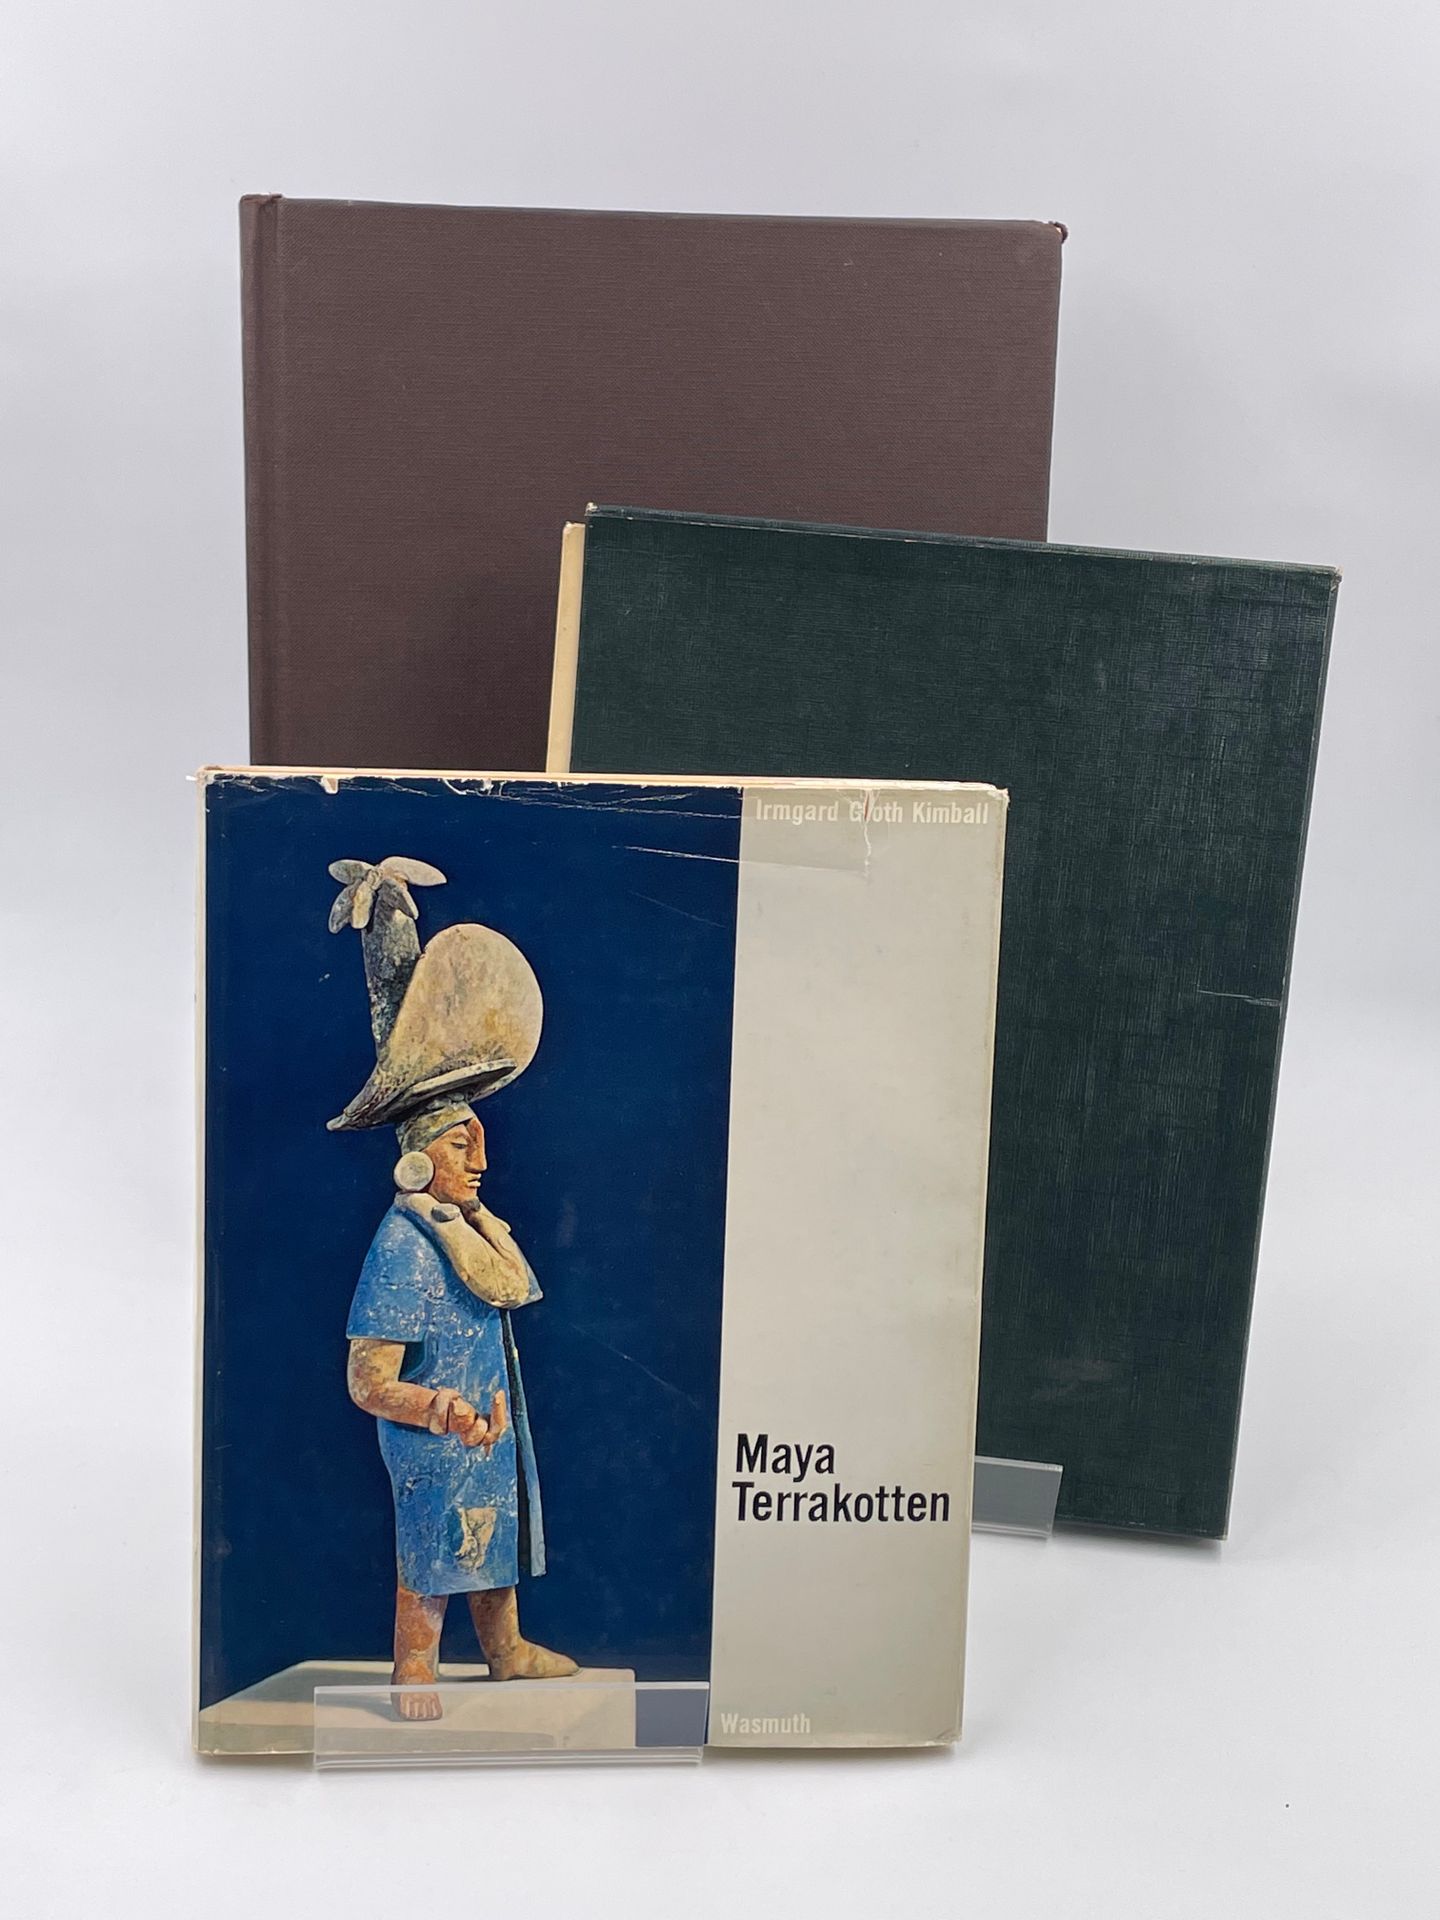 Null 3 Volumes : 

- "MAYA TERRAKOTTEN" Irmgard Groth Kimball, Verlag Ernst Wasm&hellip;